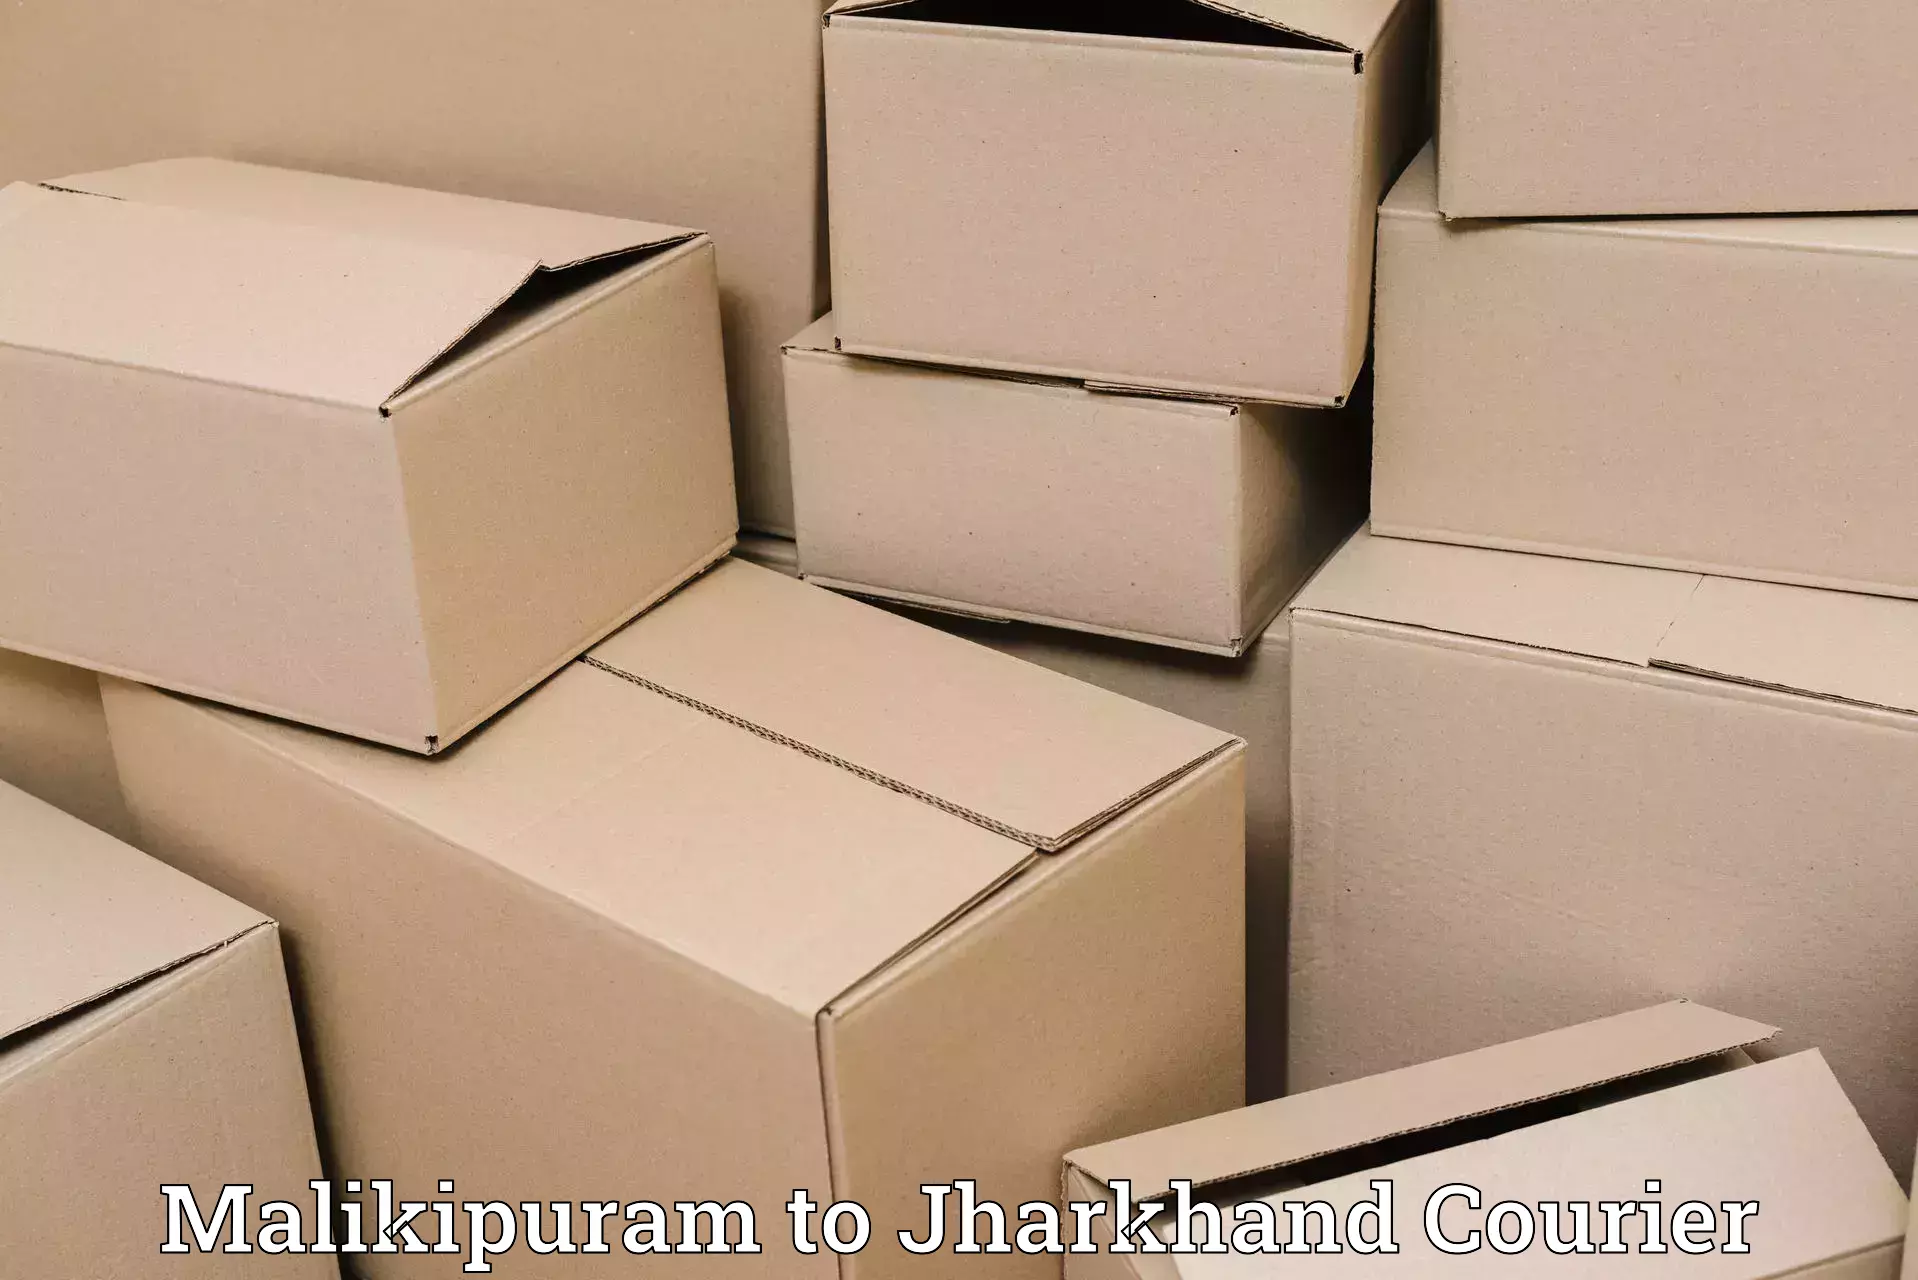 Express delivery capabilities in Malikipuram to Lohardaga